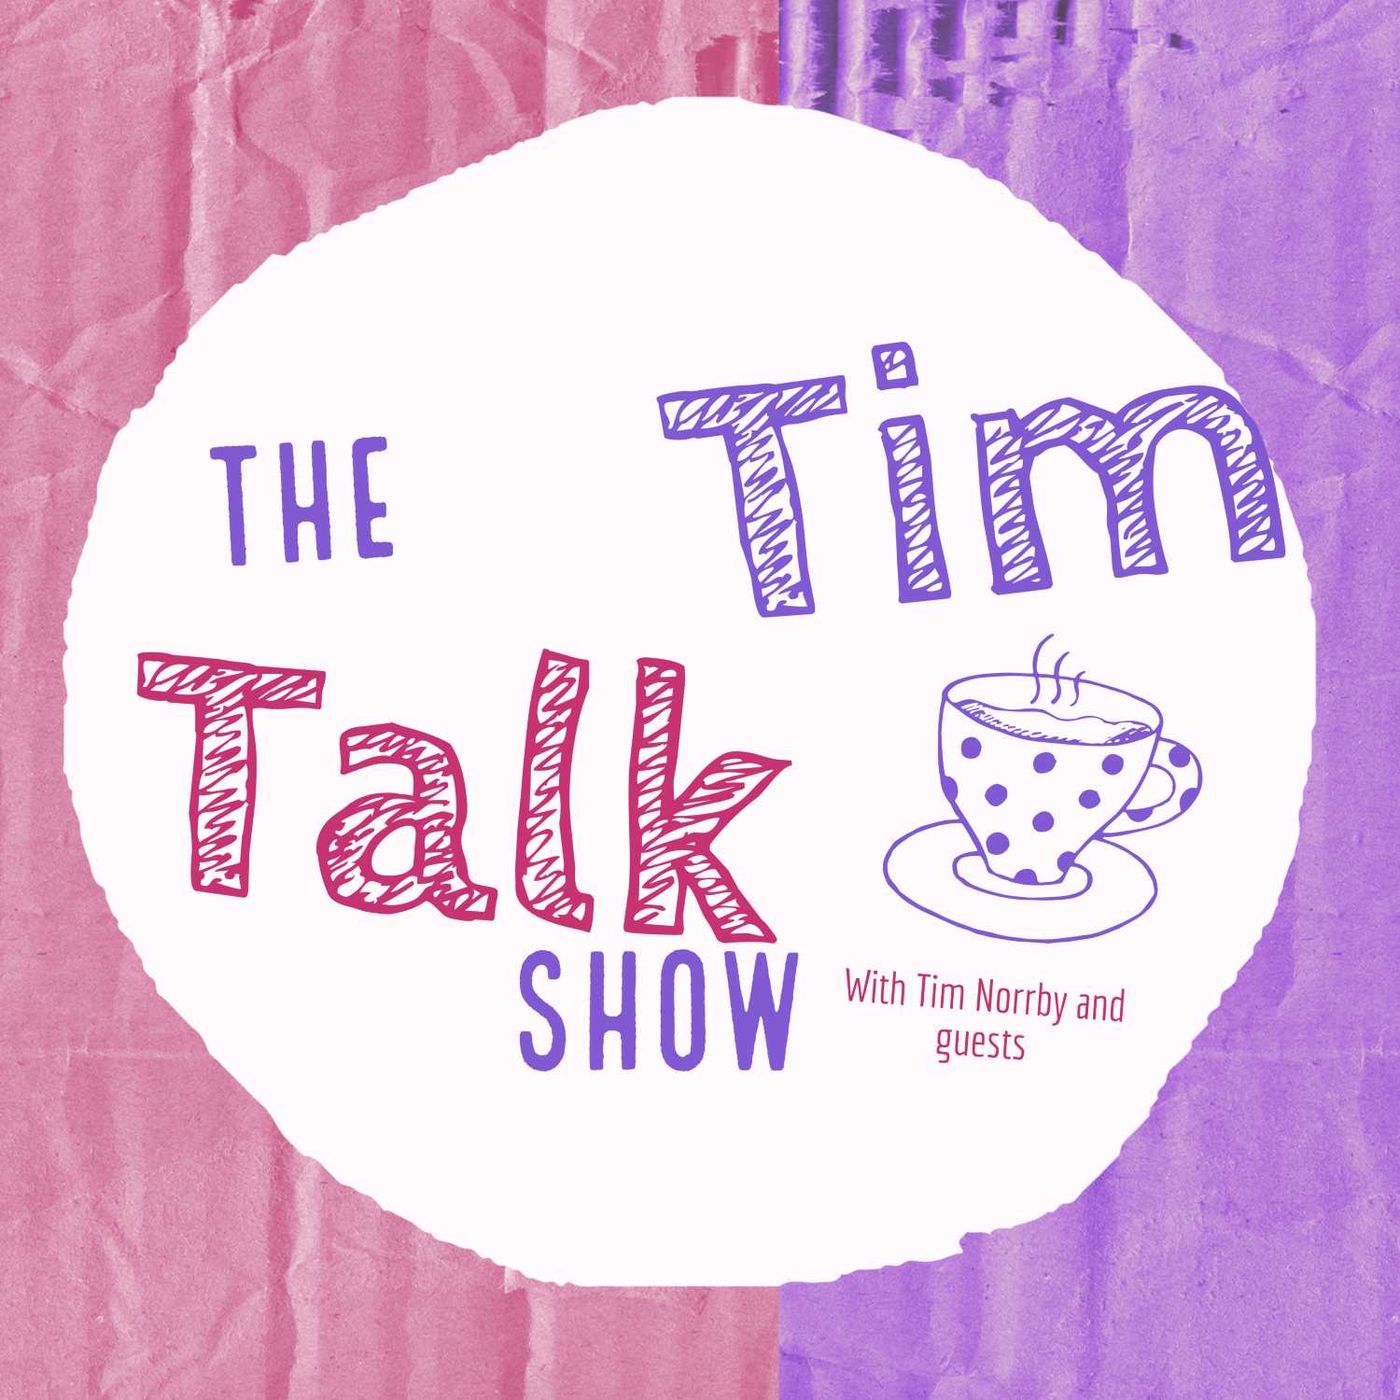 Intruducing... The Tim Talk Show!